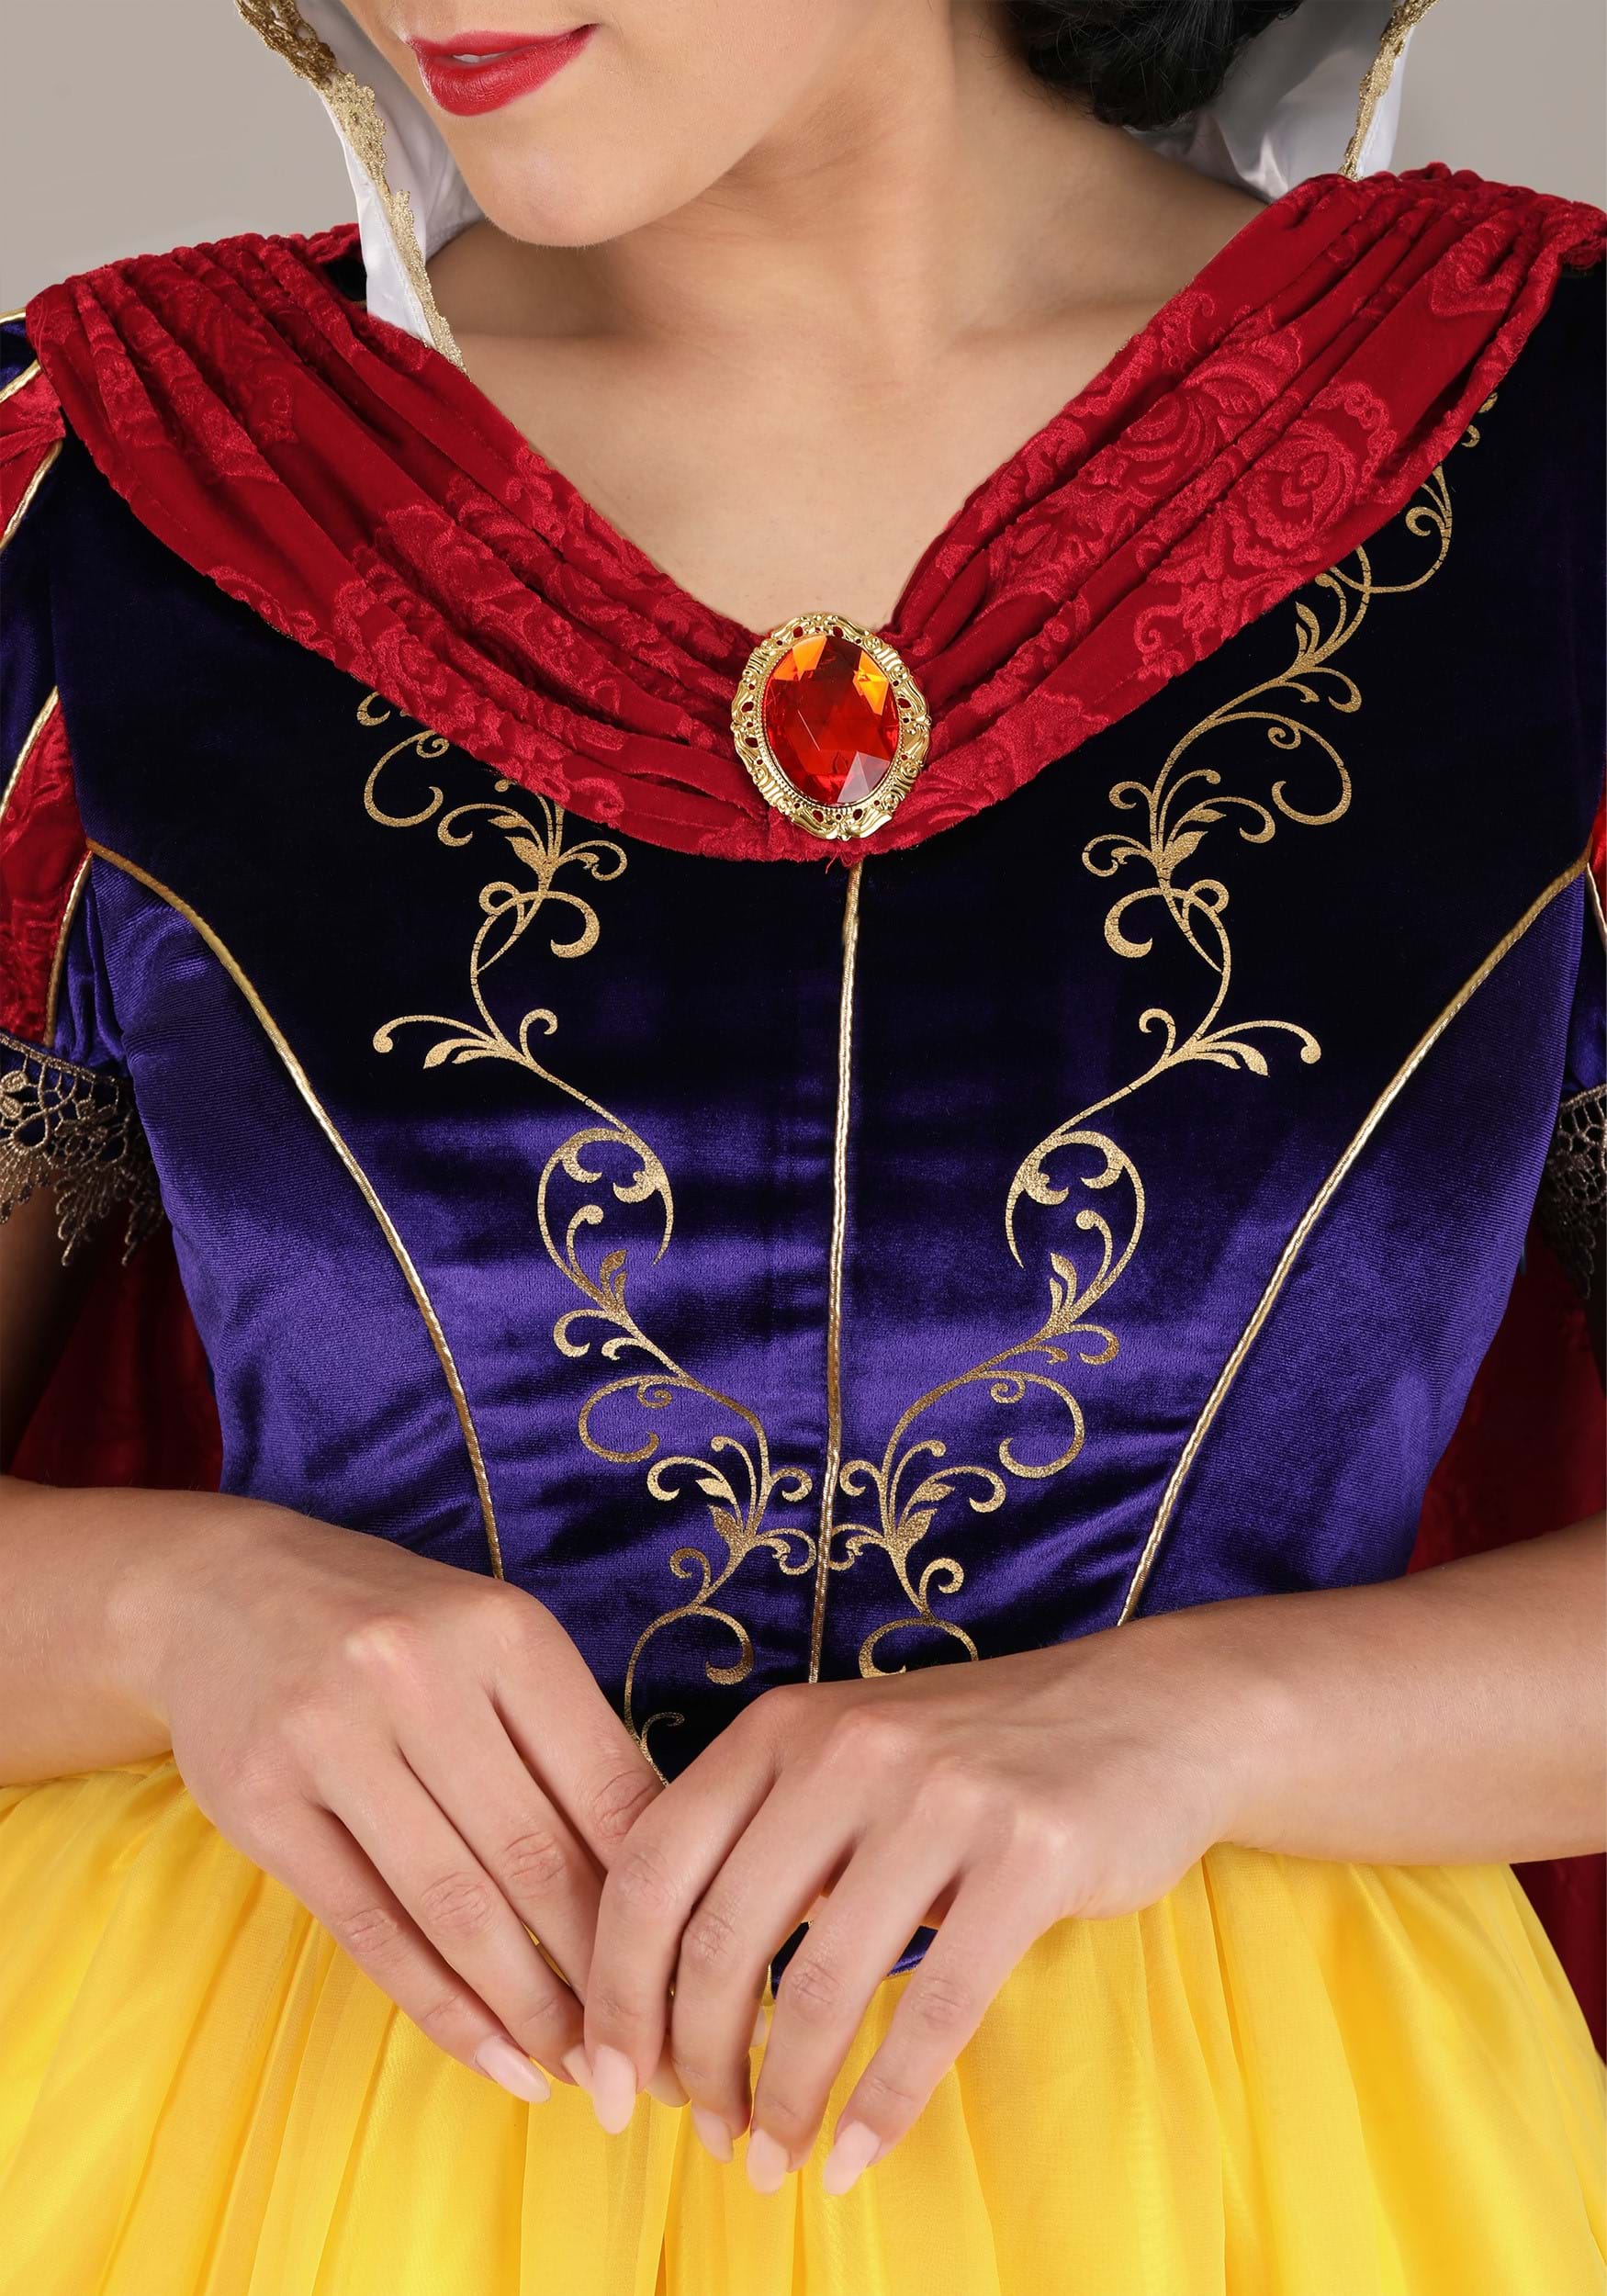 Snow White Princess Adult Halloween Fancy Dress Costume Book Day Fairytale